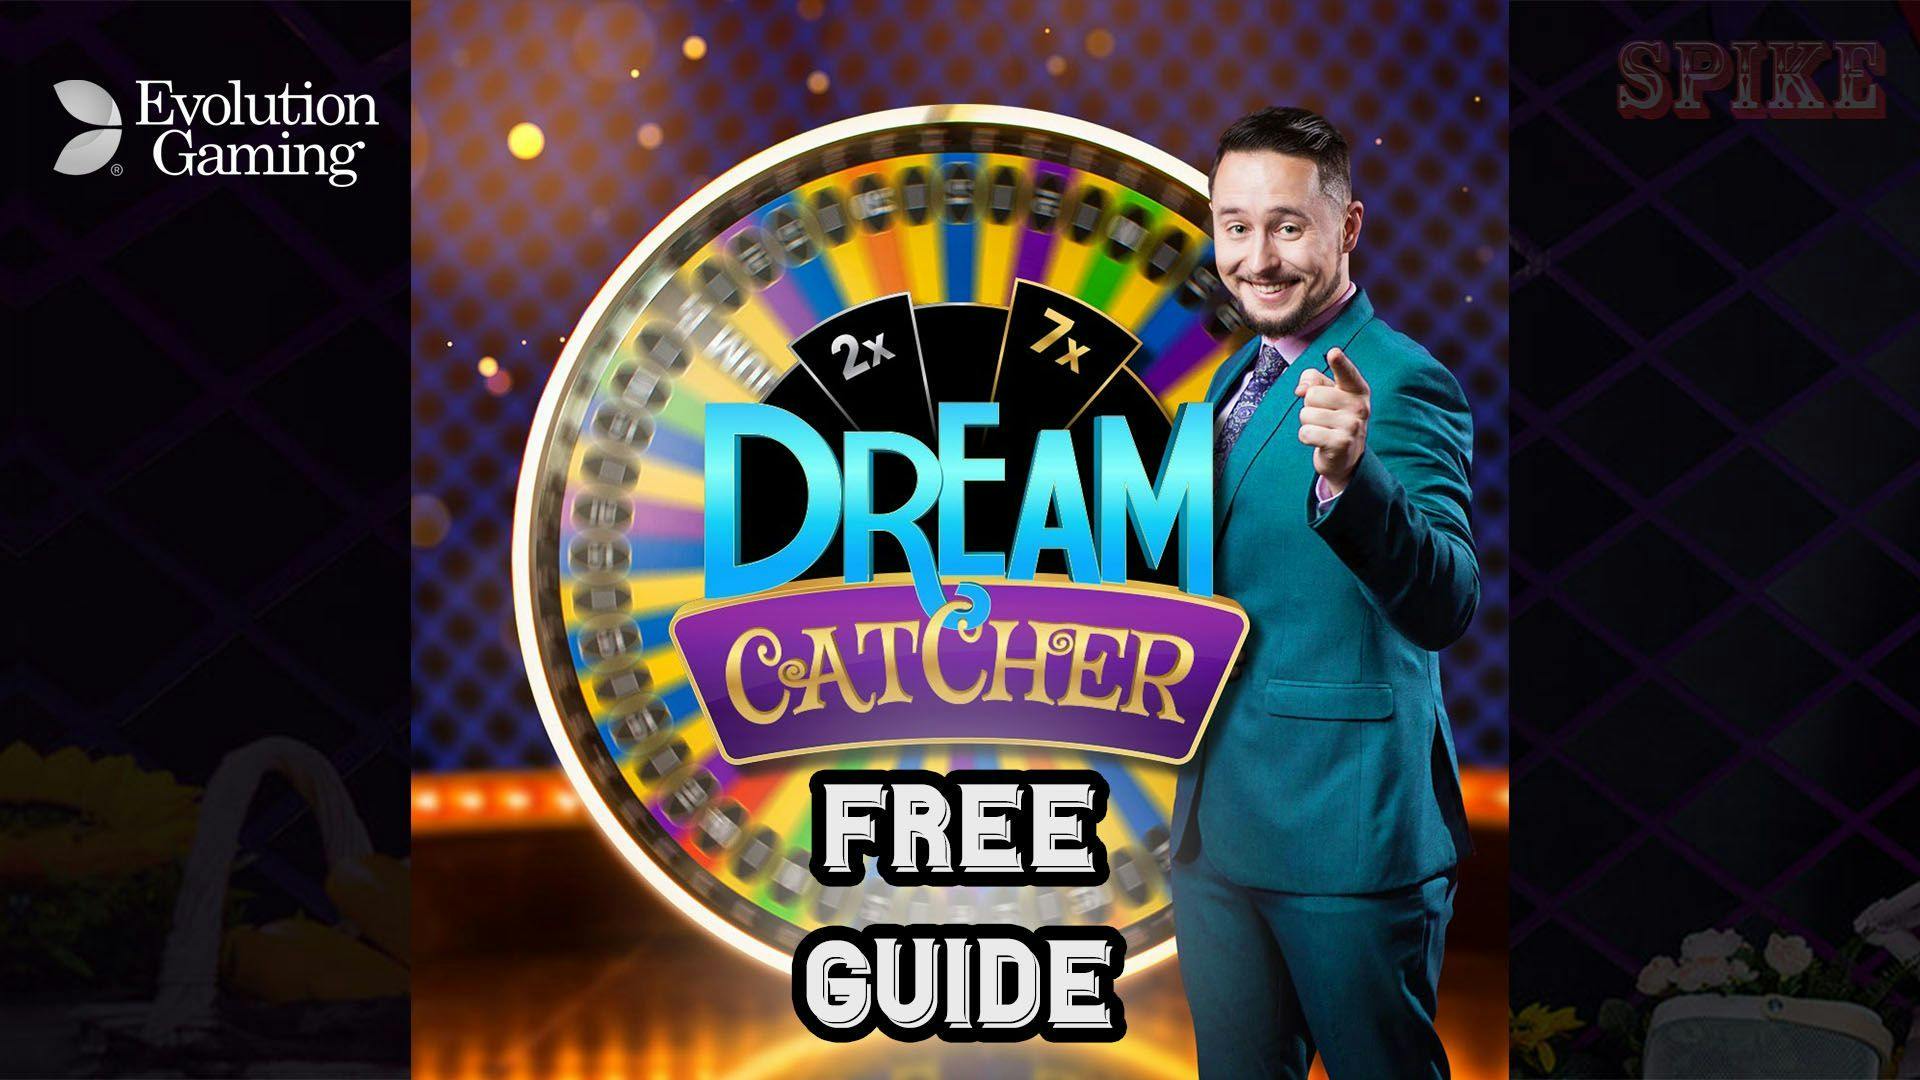 Free Dream Catcher Guide Casino Live Game